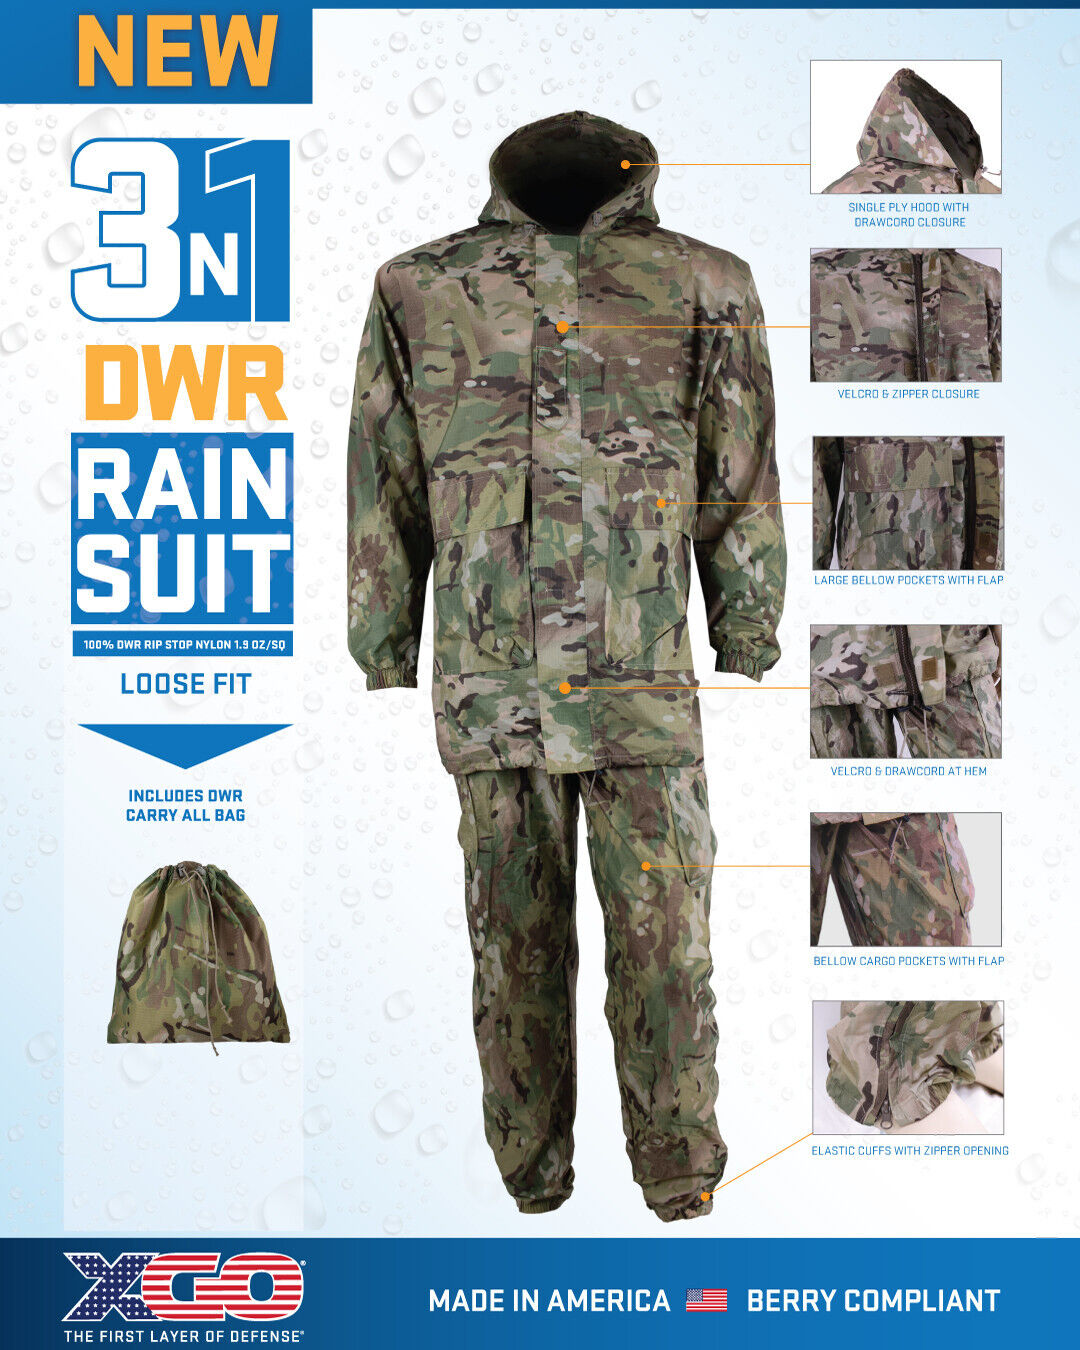 XGO 3 in 1 DWR Rain Suit w/Carry Bag, 100% DWR Rip Stop Nylon, US Made, Medium